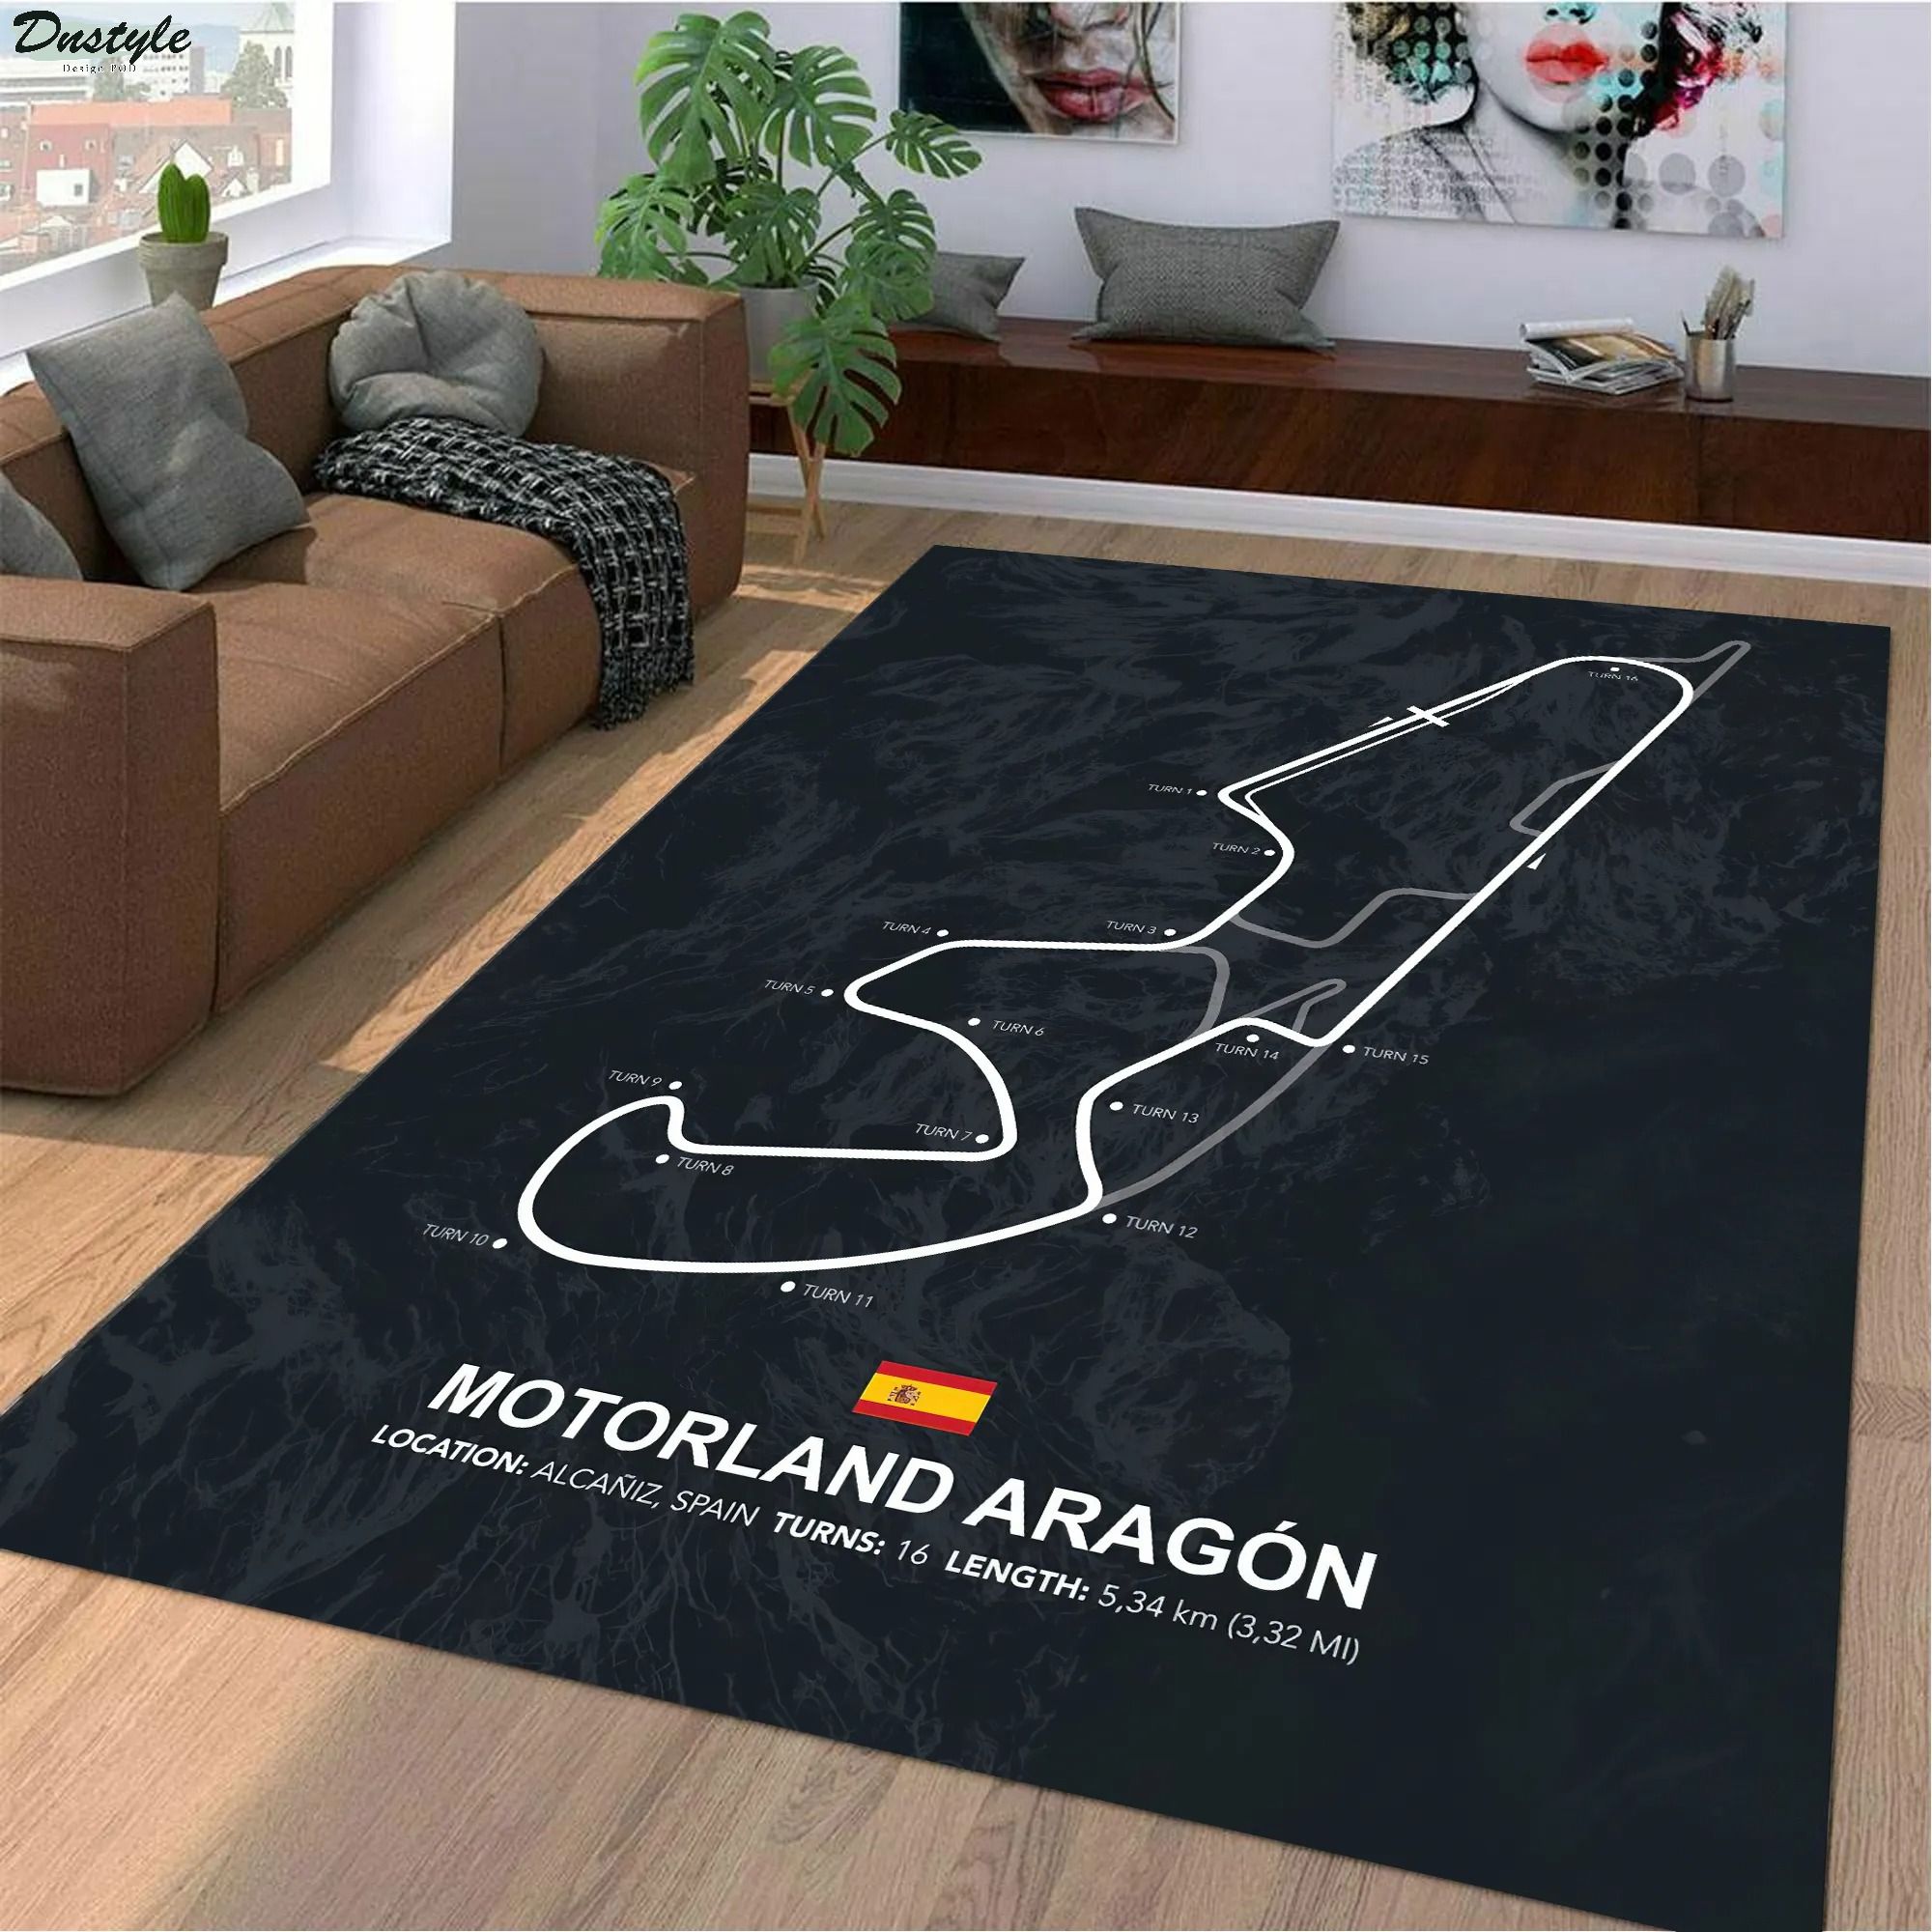 Motorland aragon f1 track rug